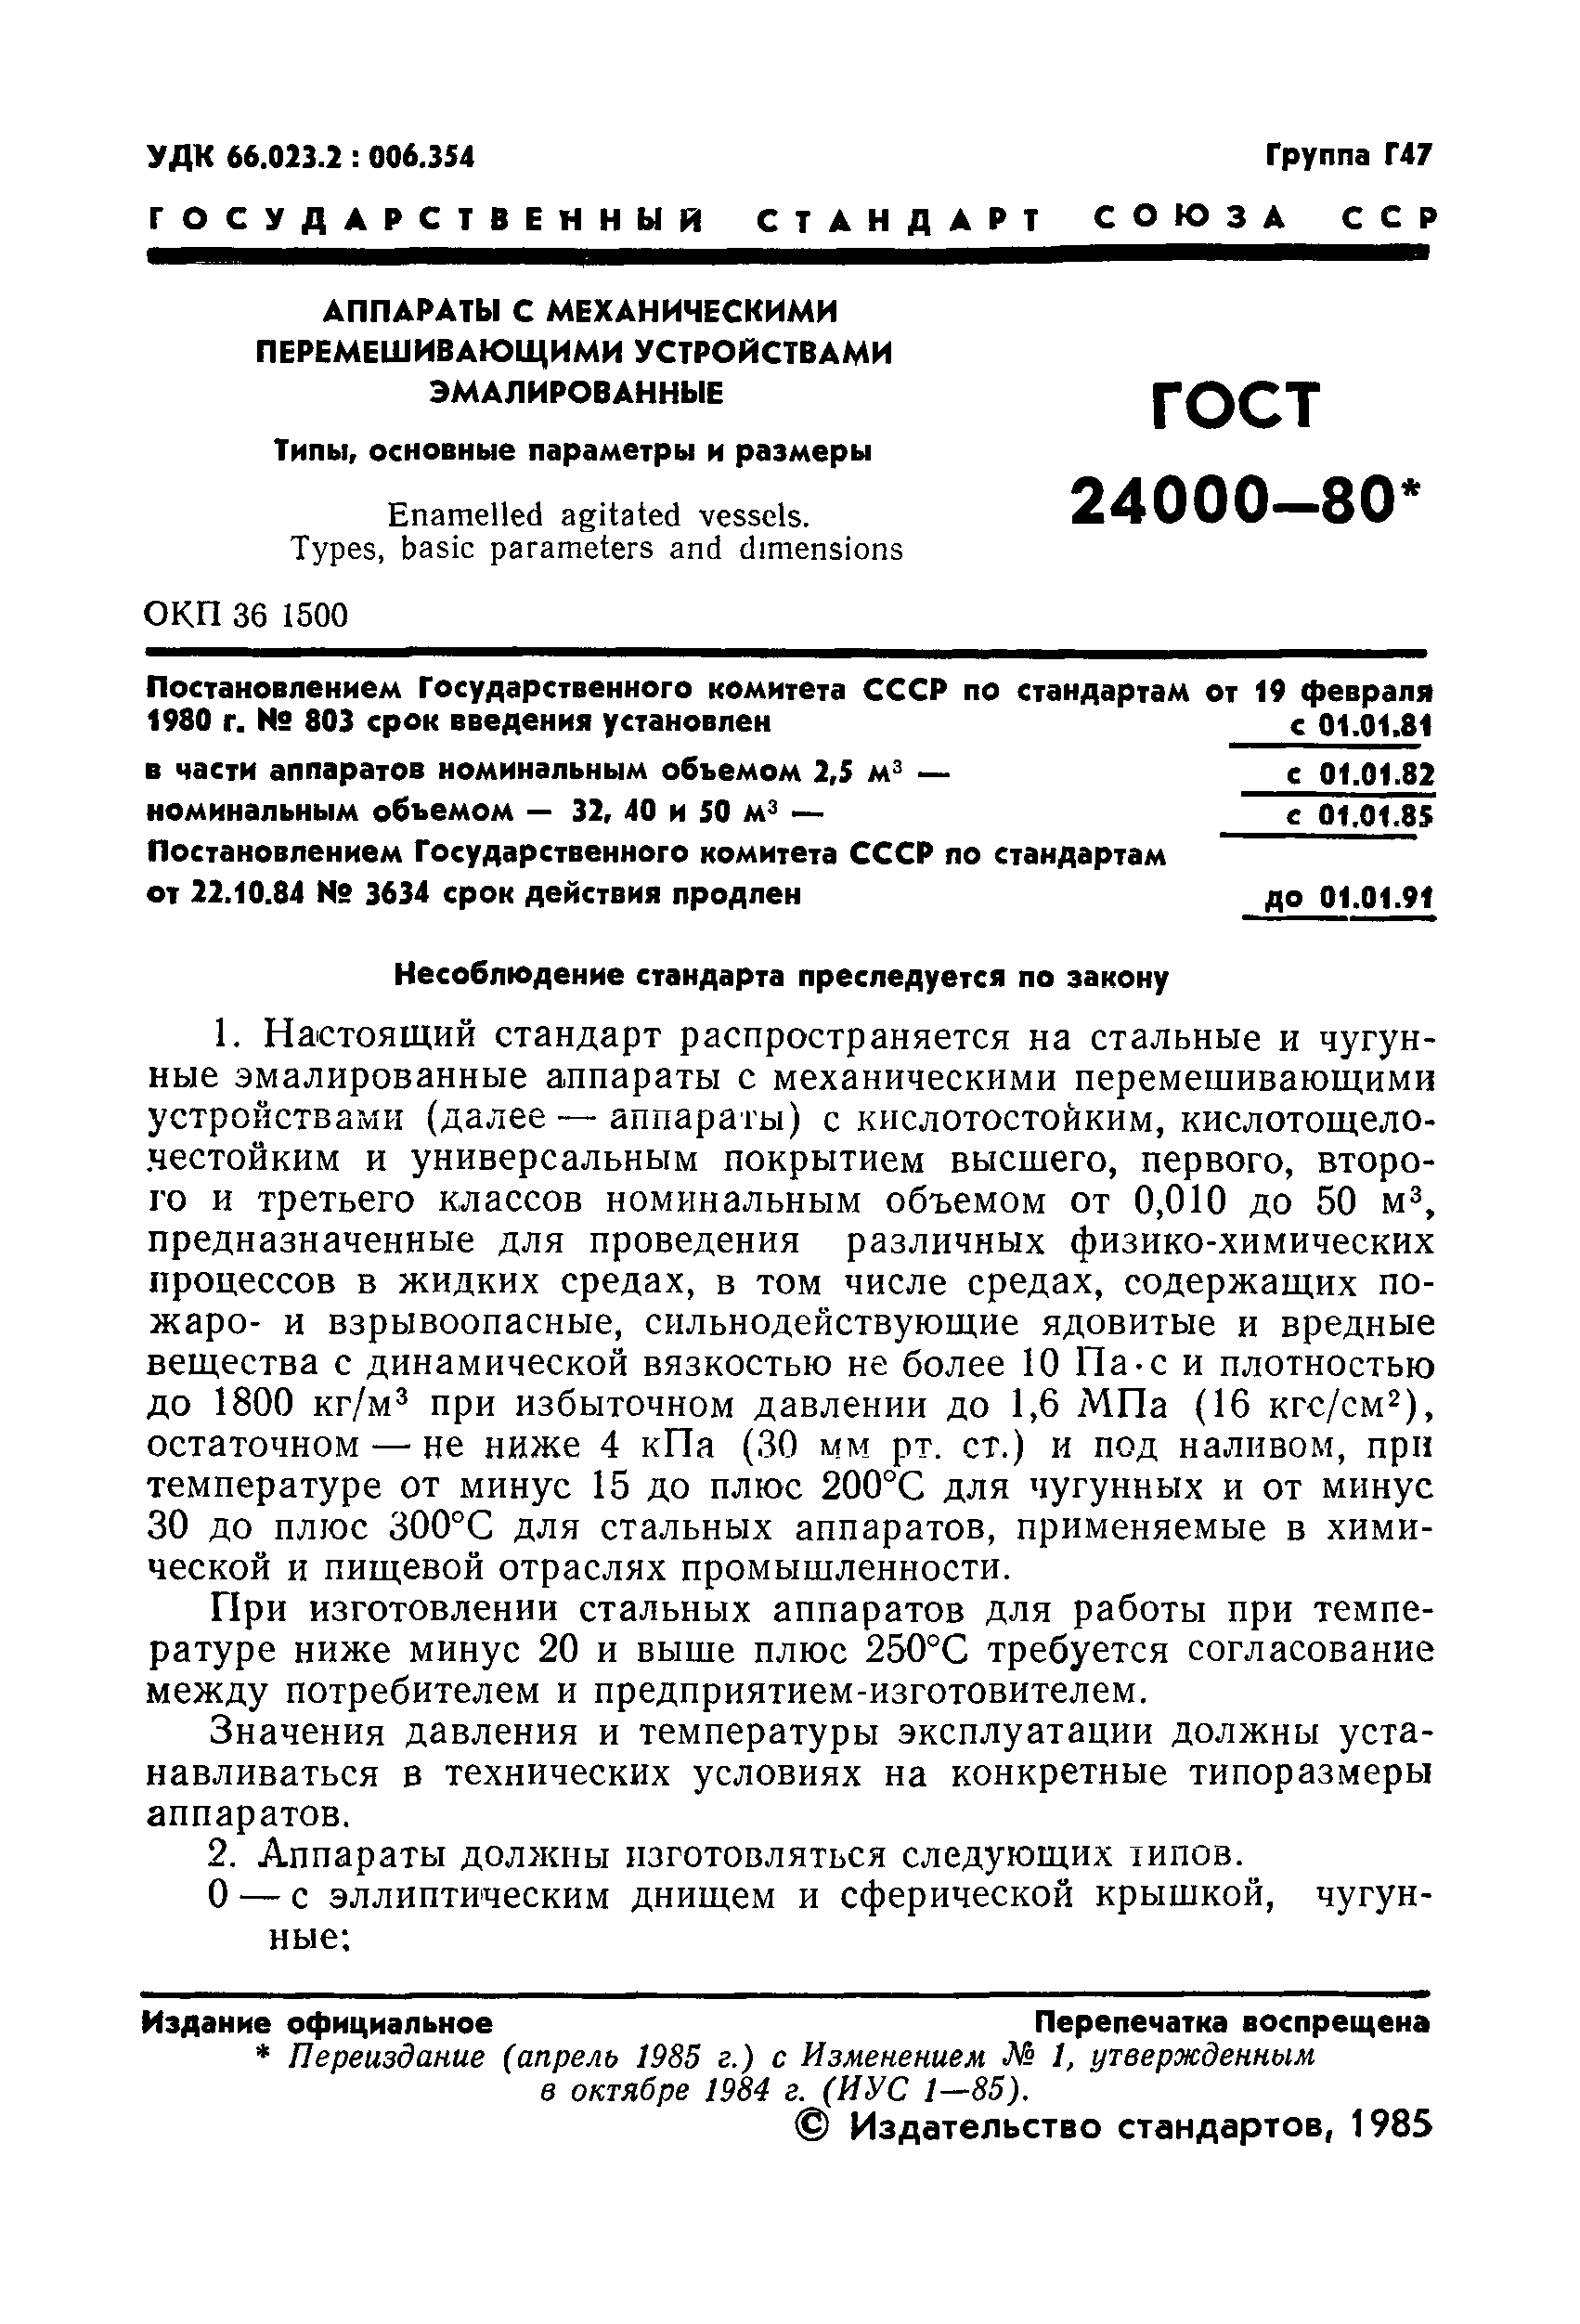 ГОСТ 24000-80